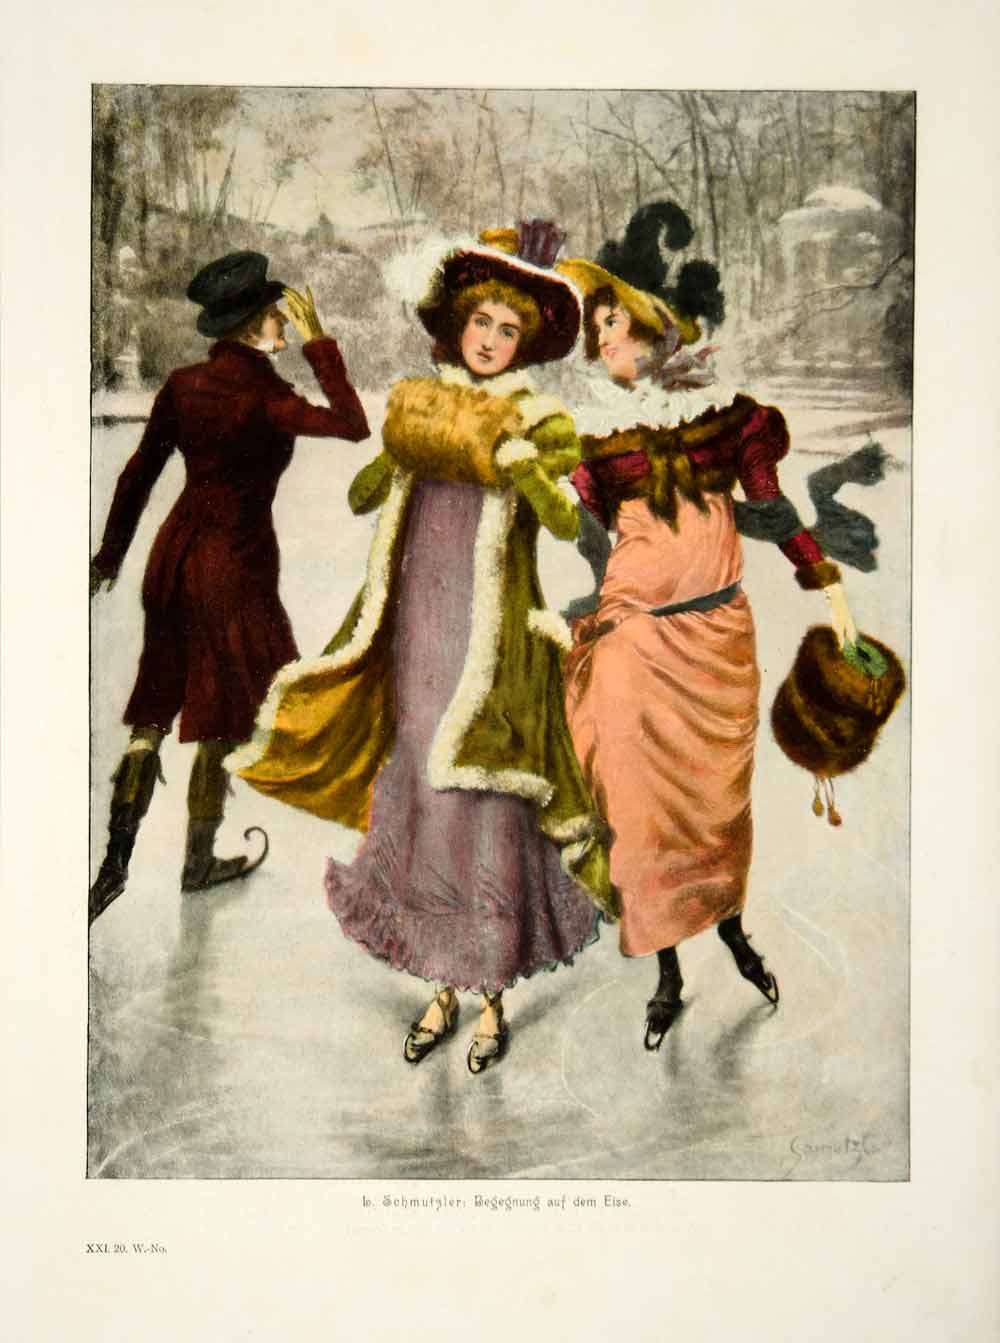 1907 Photolithograph Encounter Ice Fashion Costume Skating Girls Schmutzler MK2